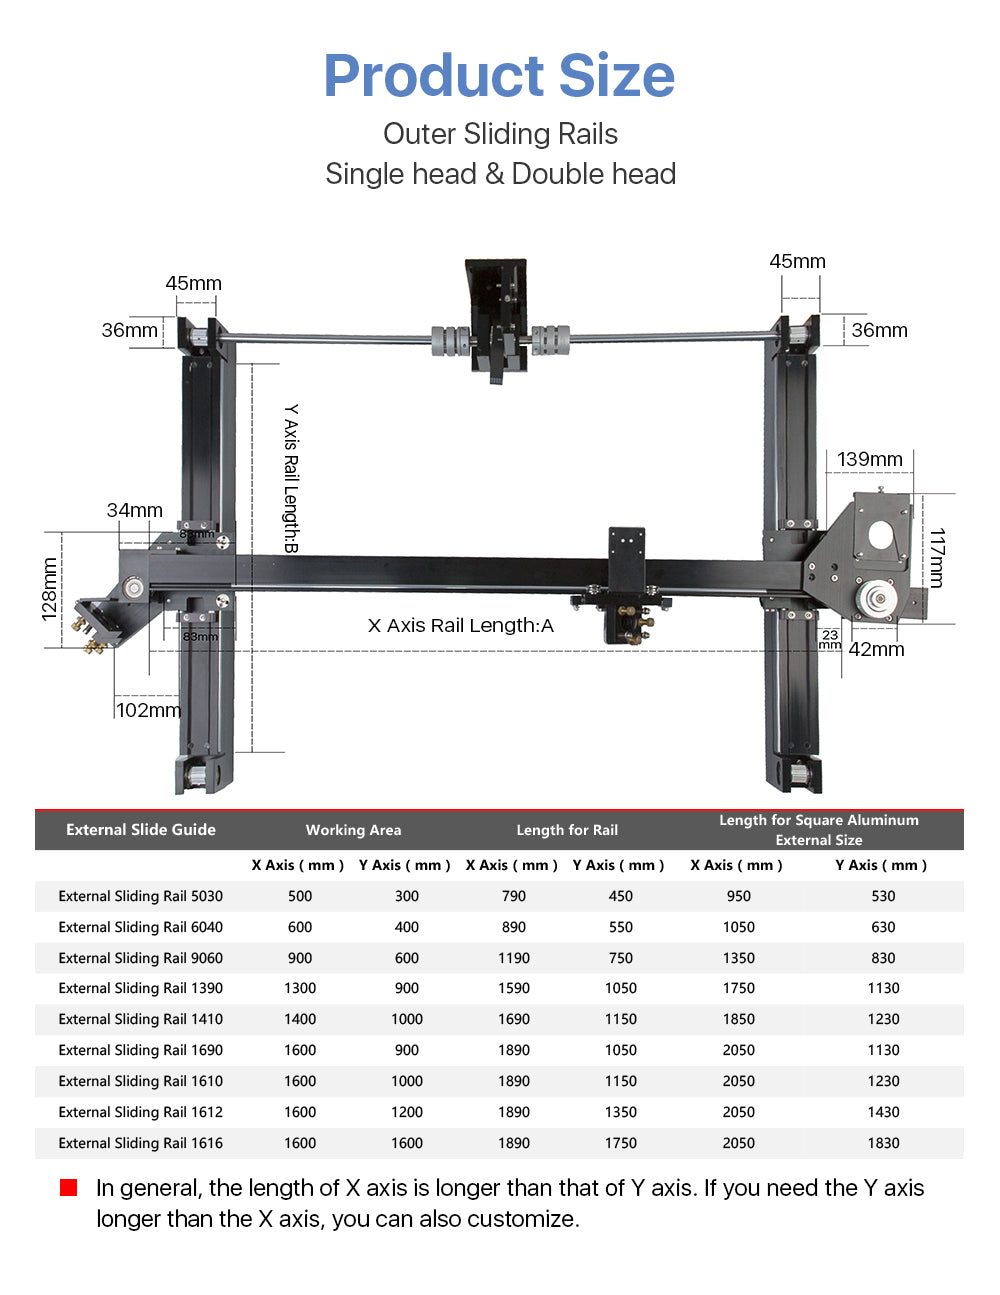 External Slide Guide Rails for DIY CO2 Laser Engraving Cutting Machine